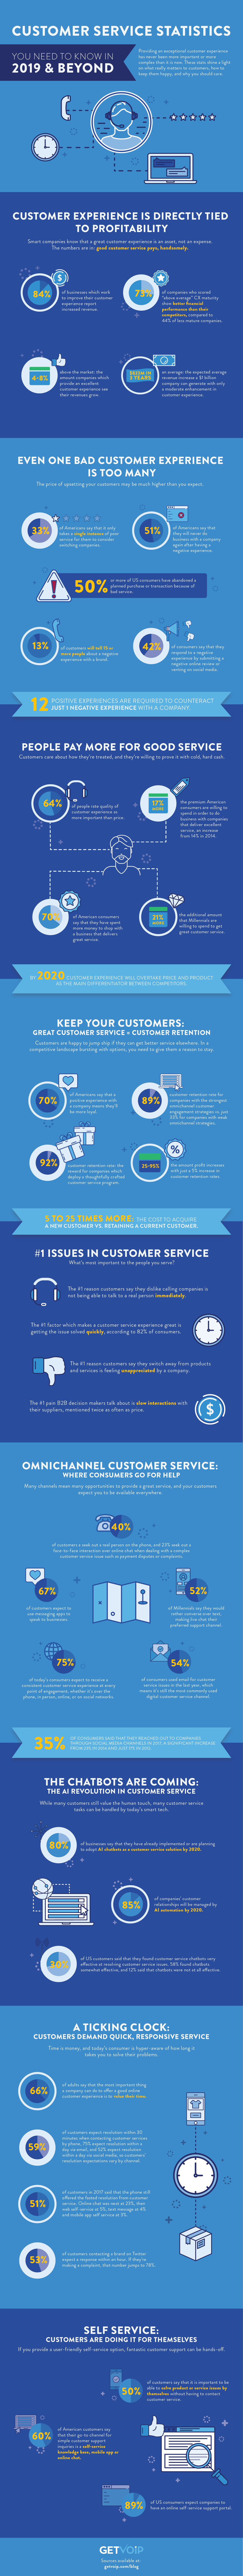 Customer Service Statistics Infographic GetVOiP